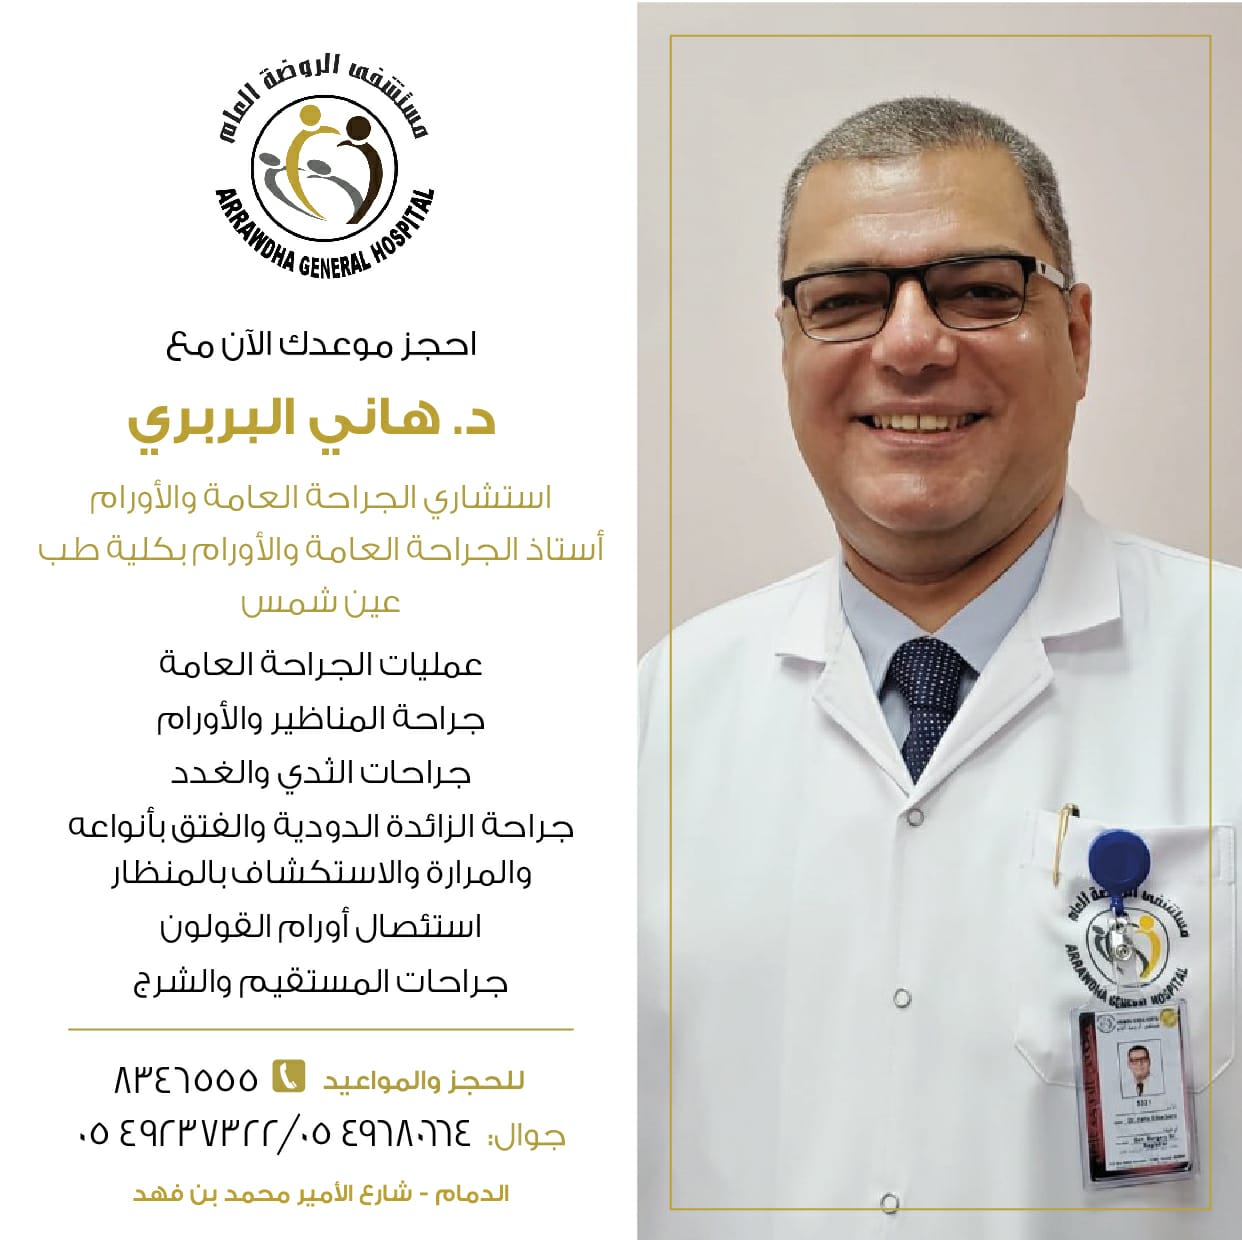 Dr. Hany El Barbari